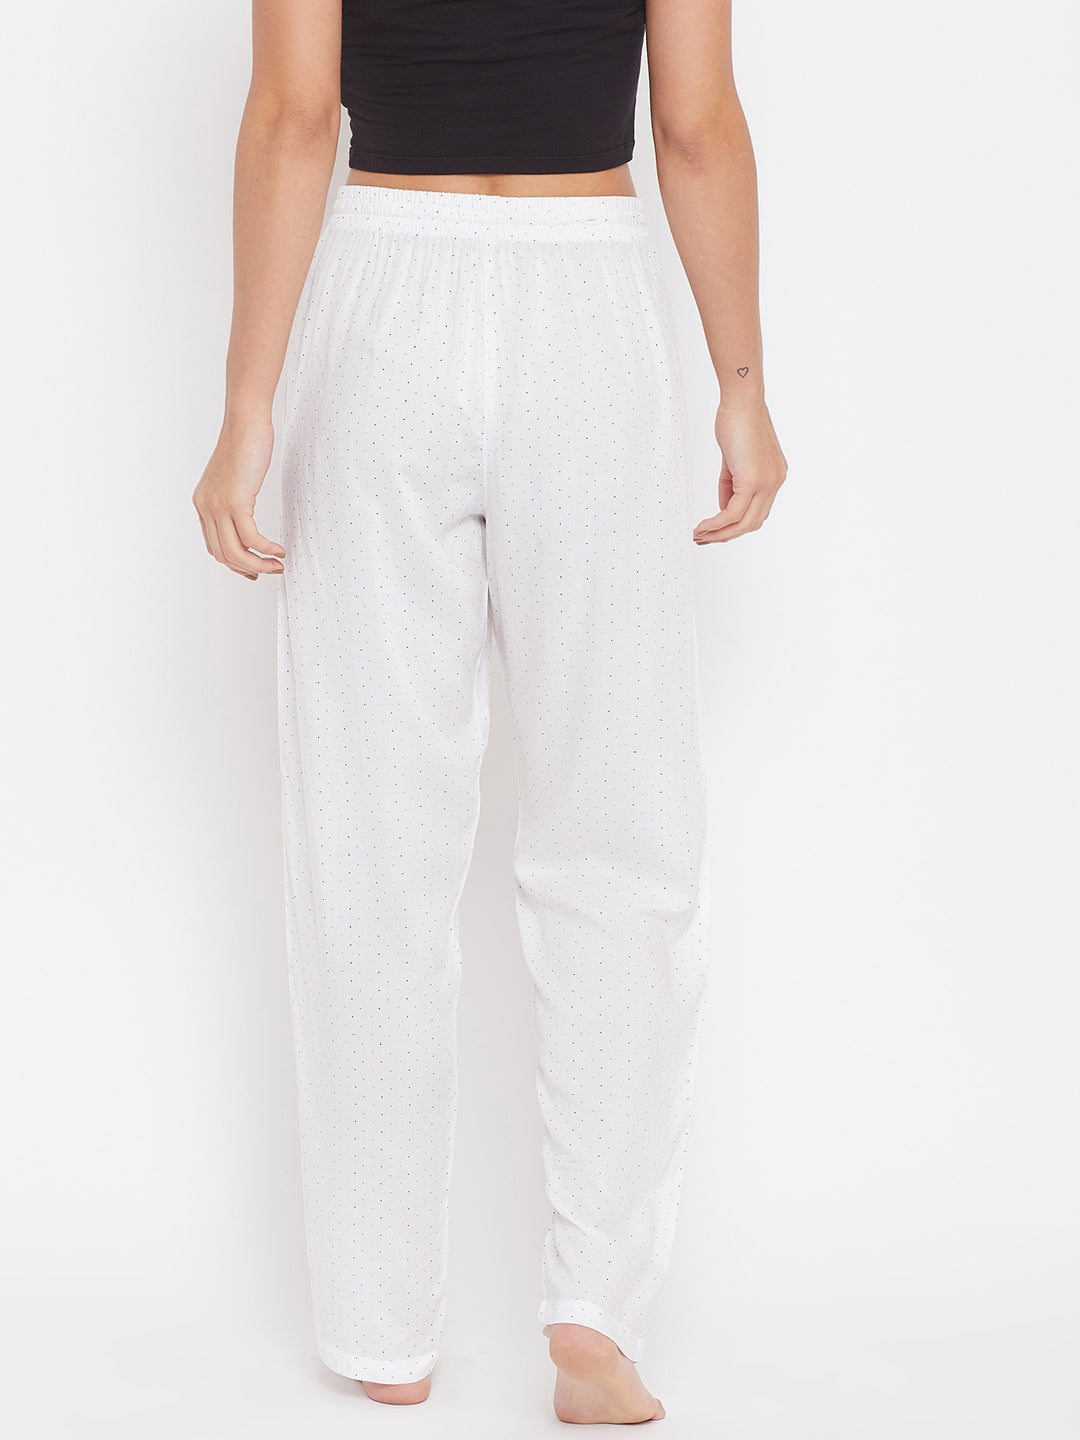 White Cotton Pyjamas - Women Lounge Pants